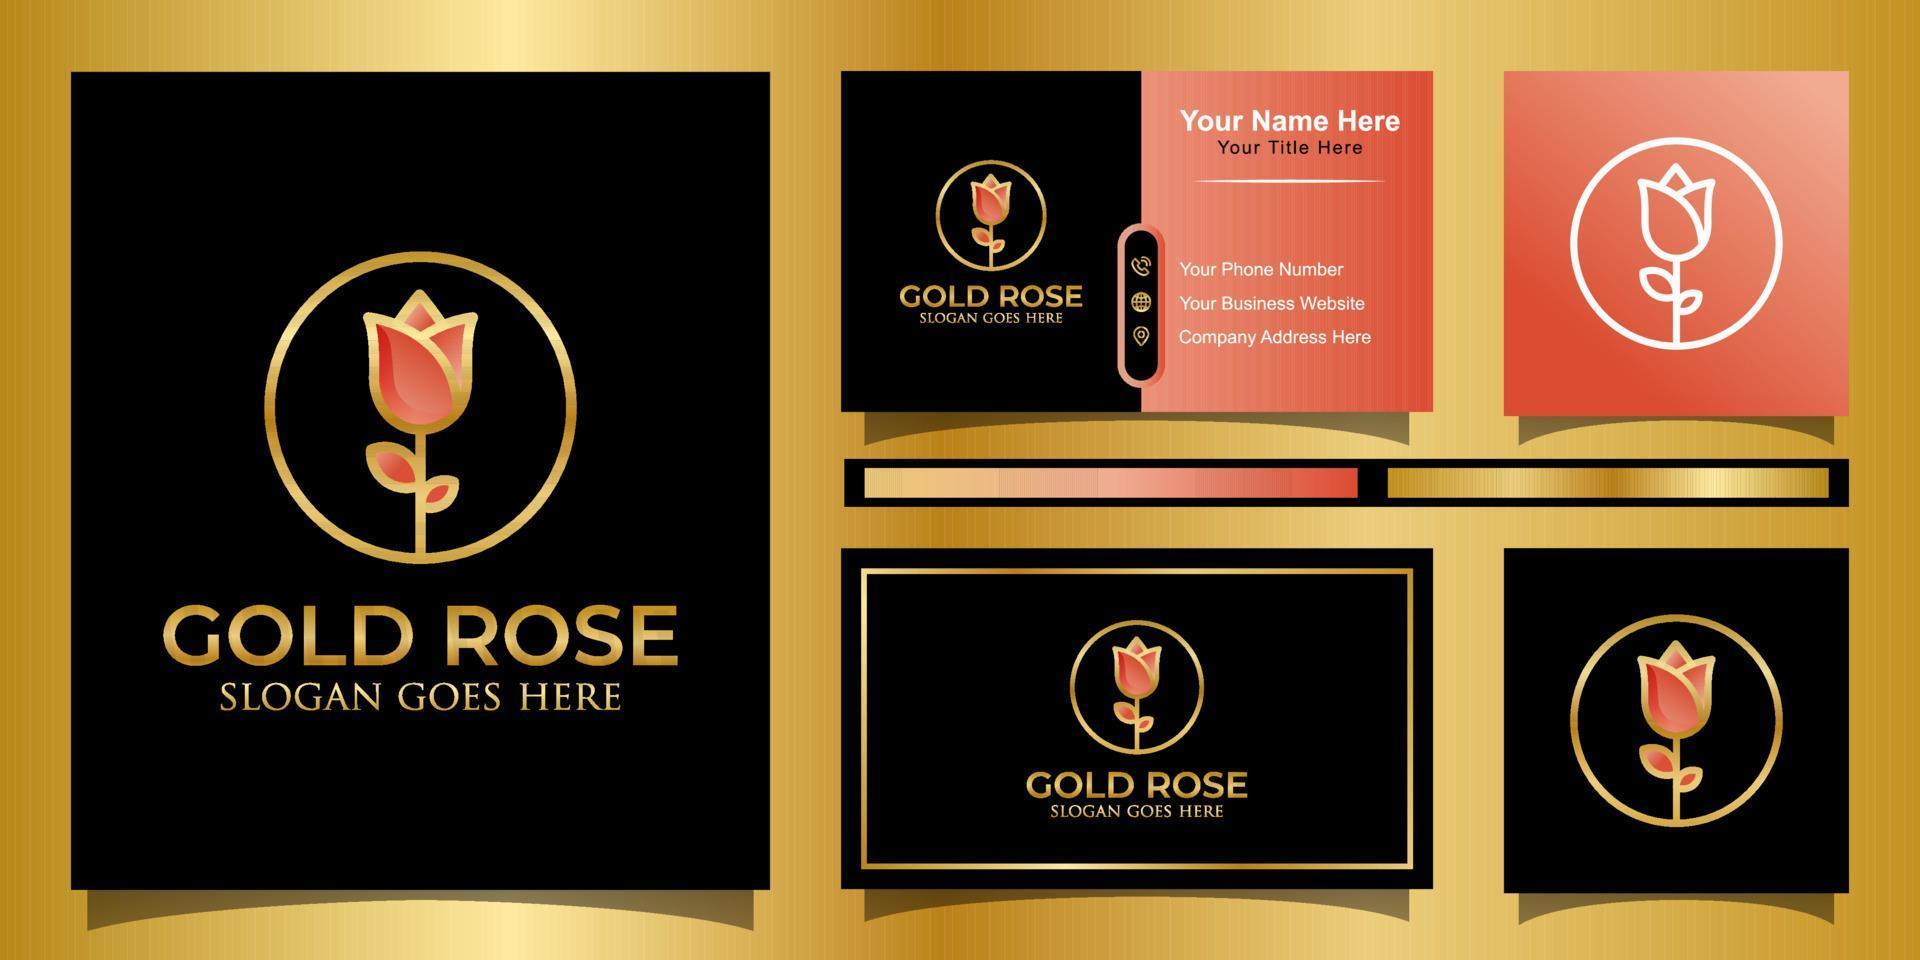 elegant golden rose with line art style logo, feminine beauty decorative design with business card vector